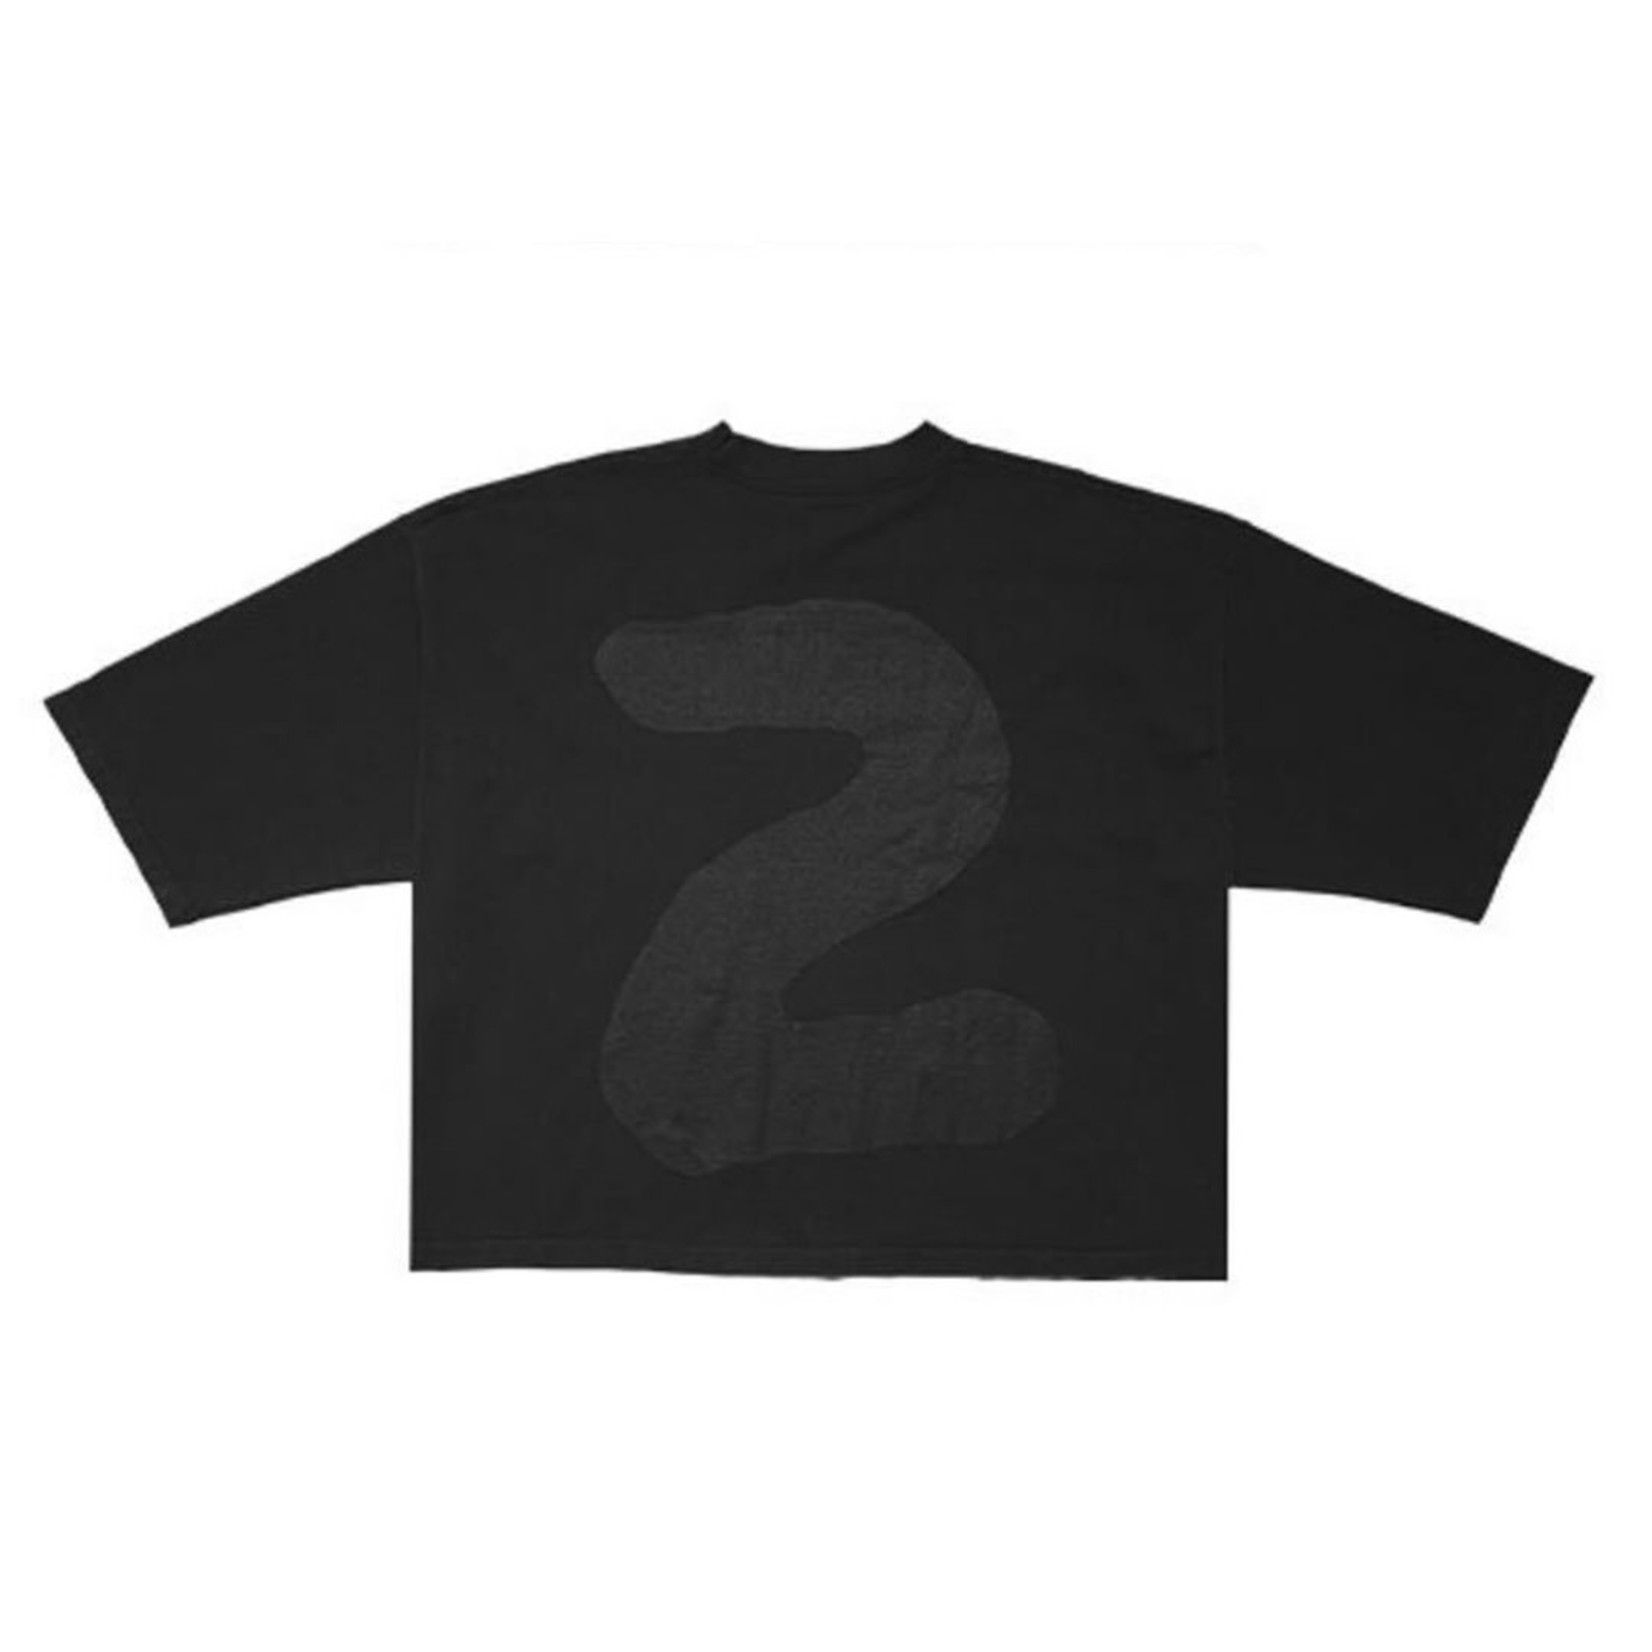 Kanye West Kanye West DONDA 2 Lit Match T shirt Black (C)